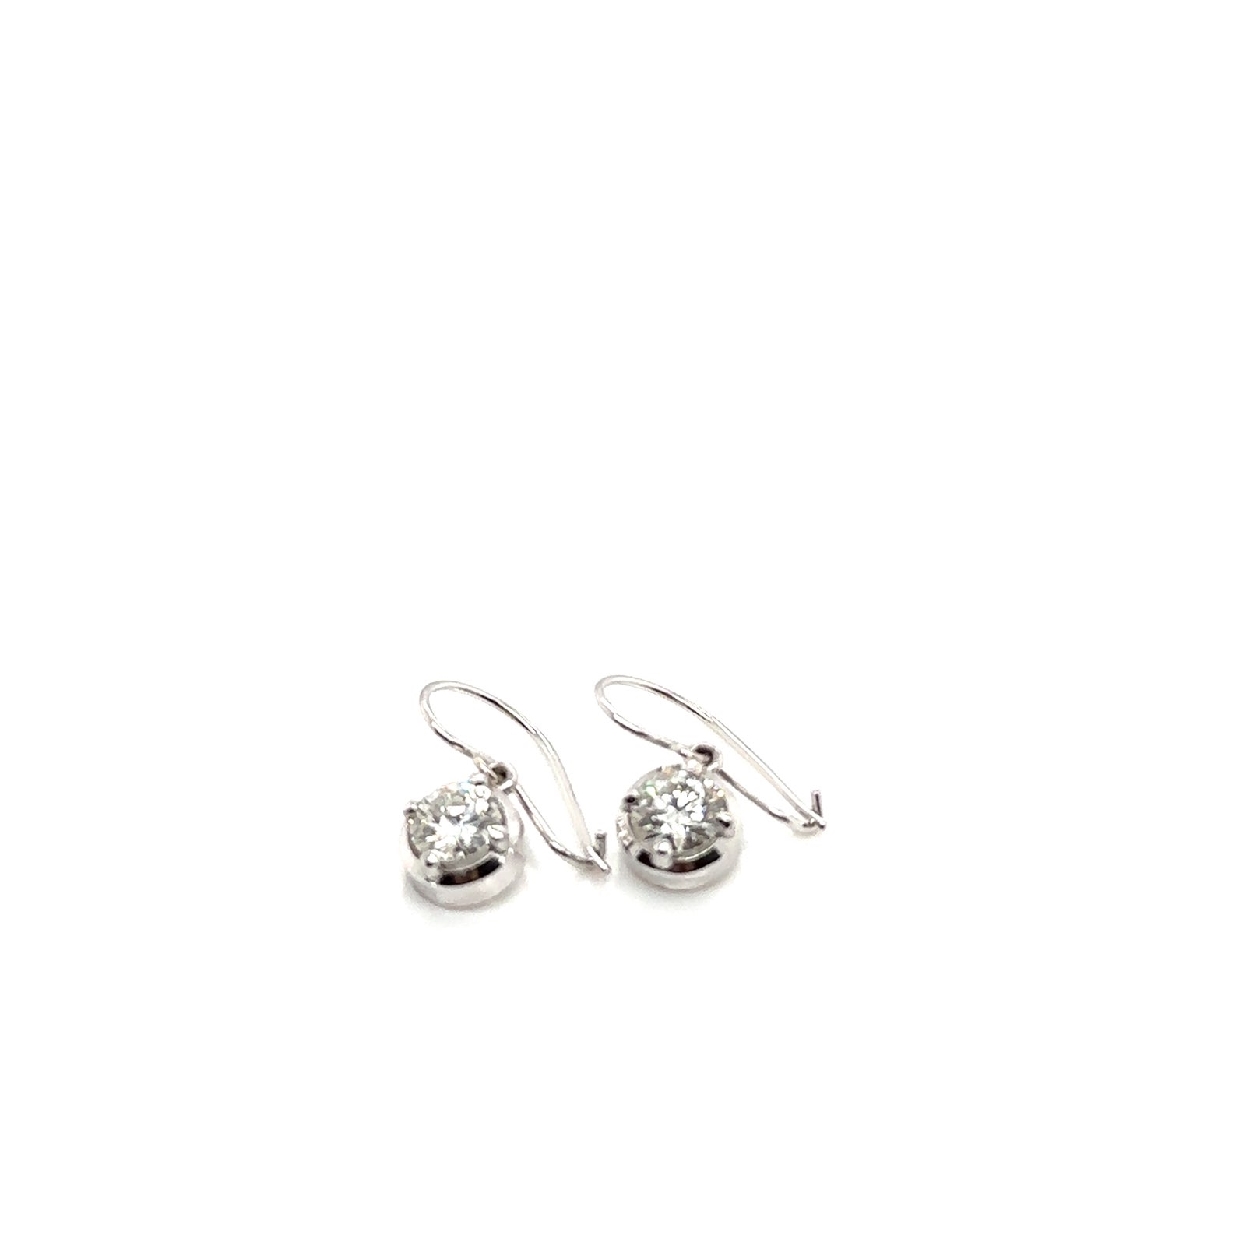 Platinum Diamond Earrings 

1.23cttw Diamonds
I/VS1 

Appraisal on File